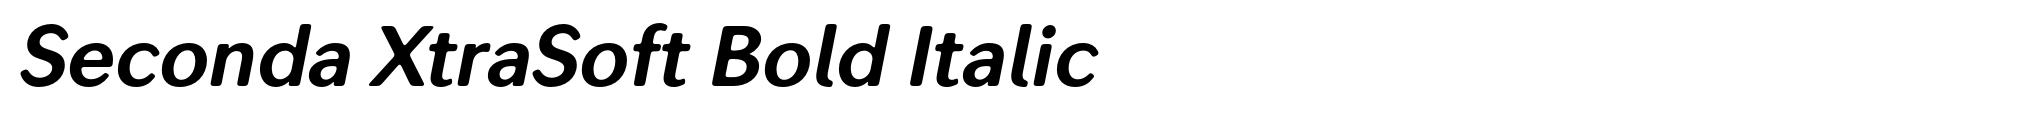 Seconda XtraSoft Bold Italic image